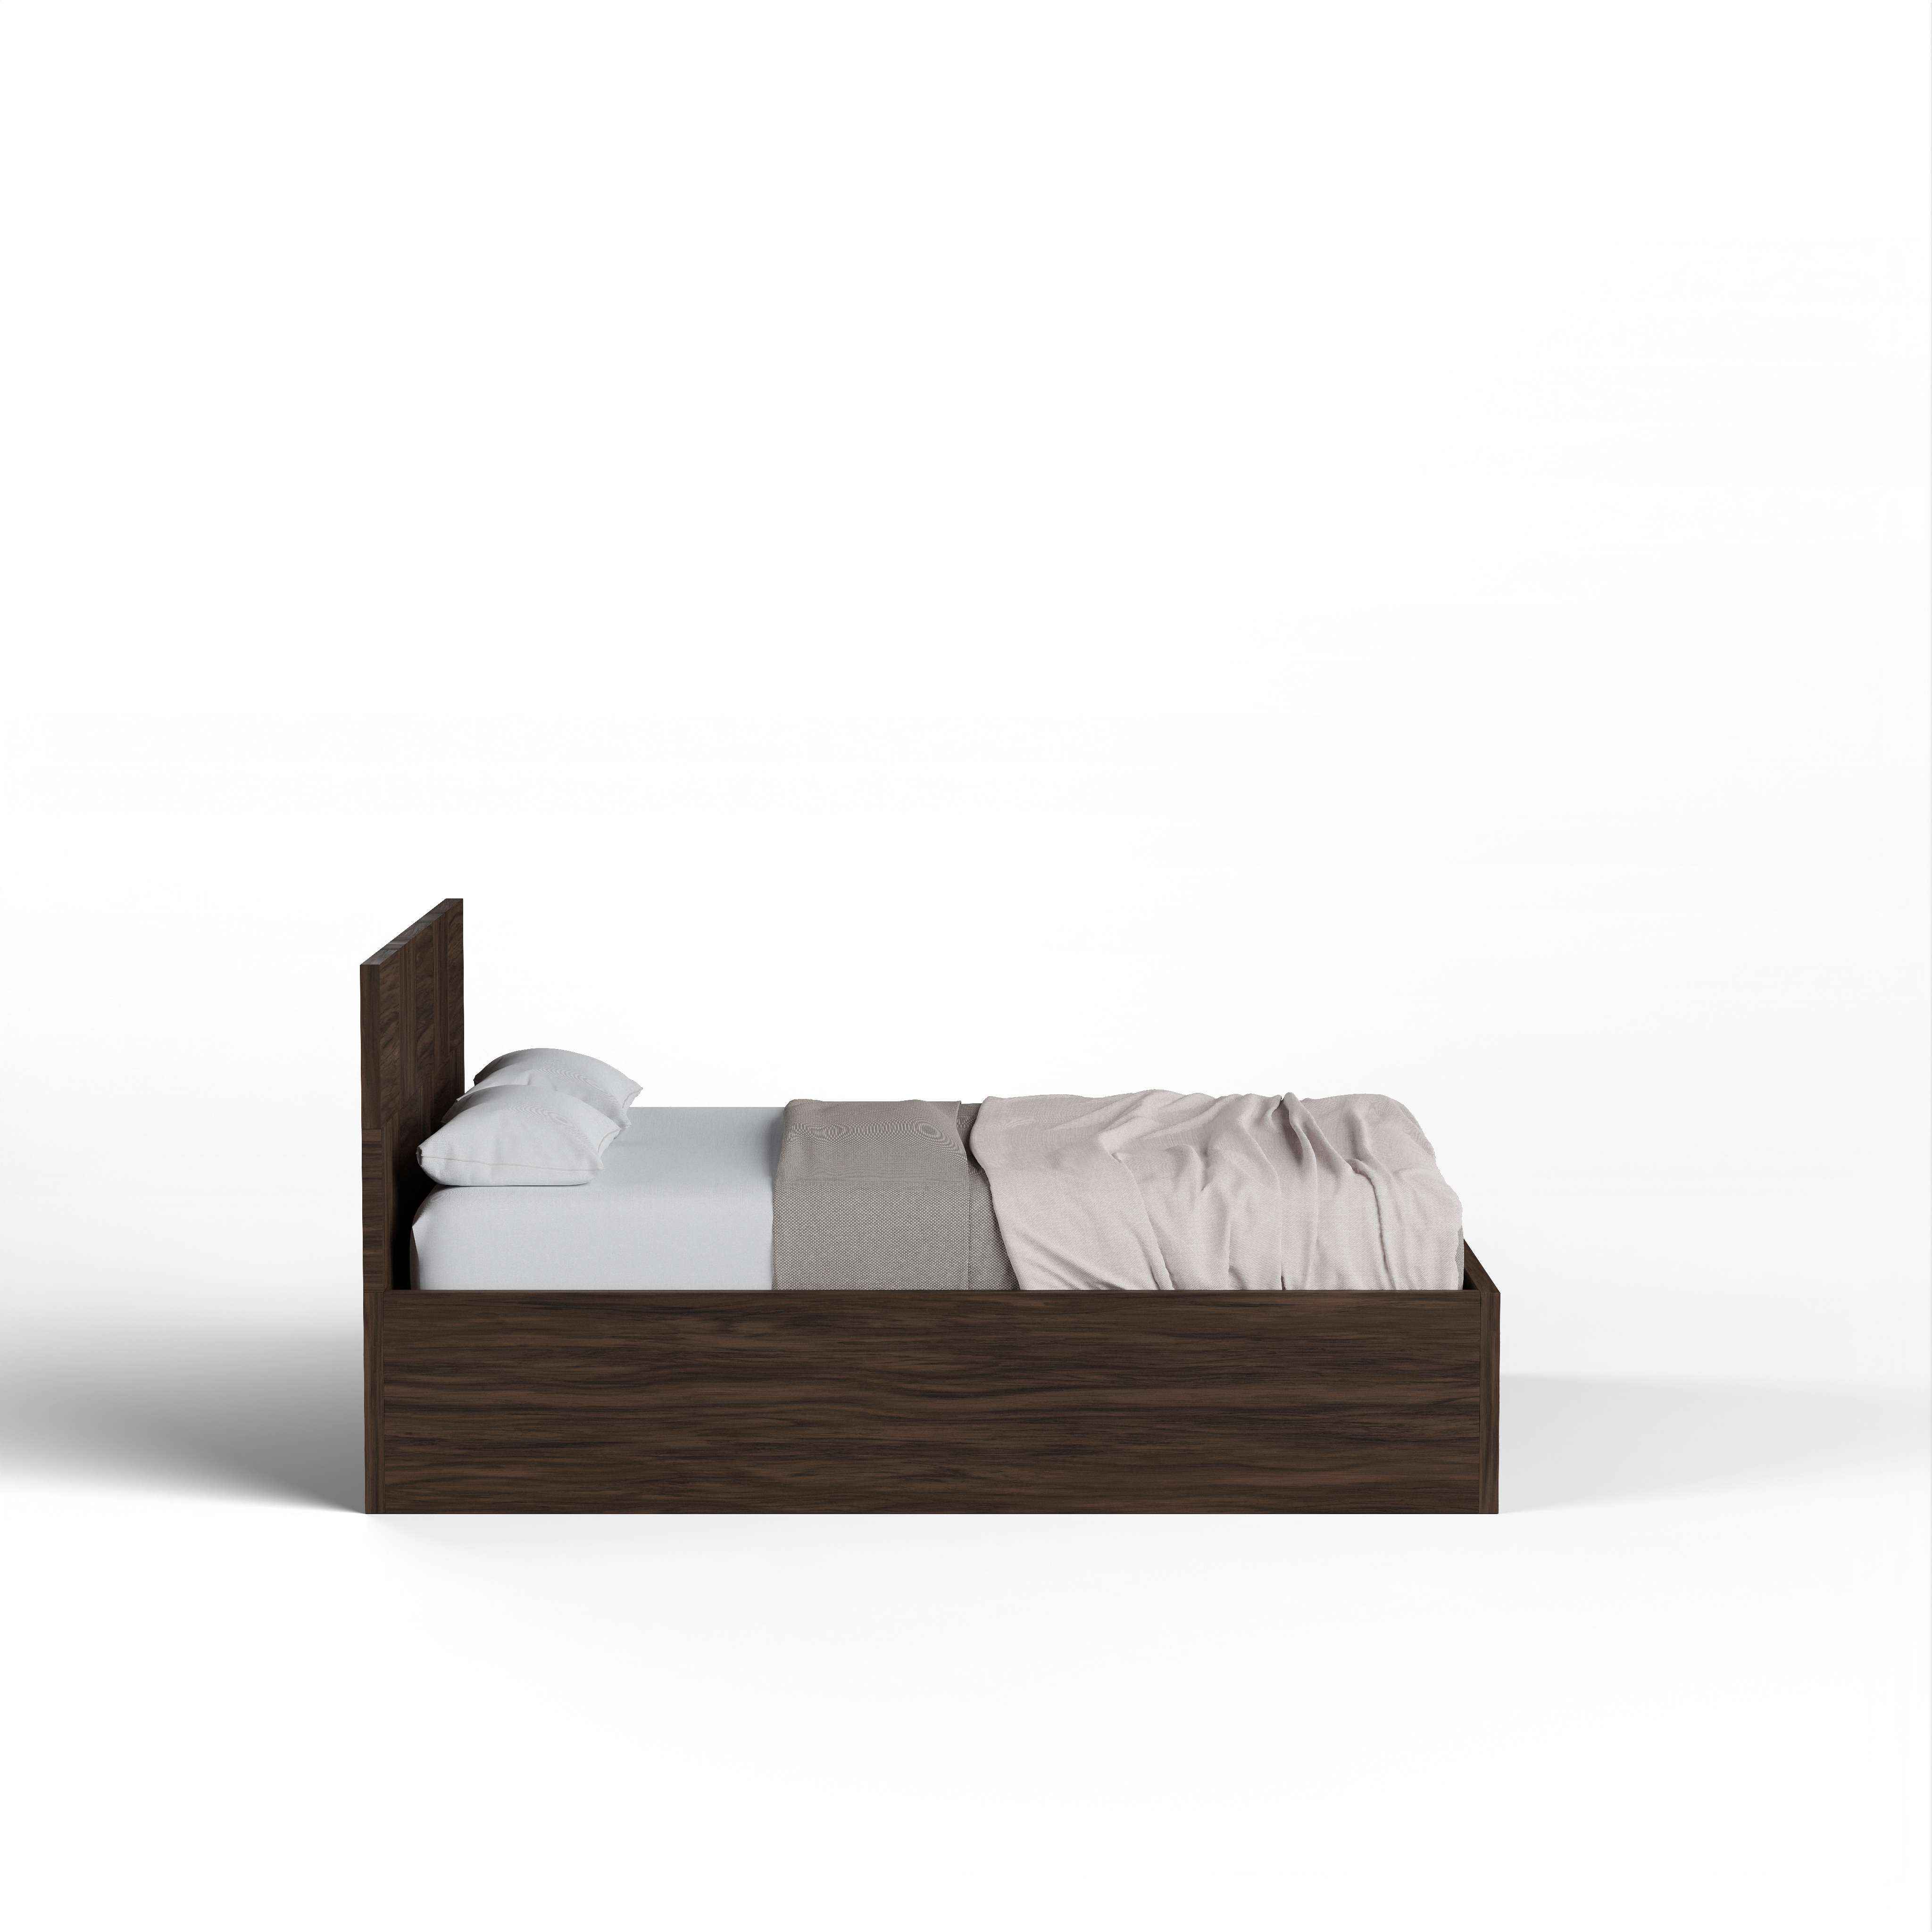 Mikhail Queen Size Bed